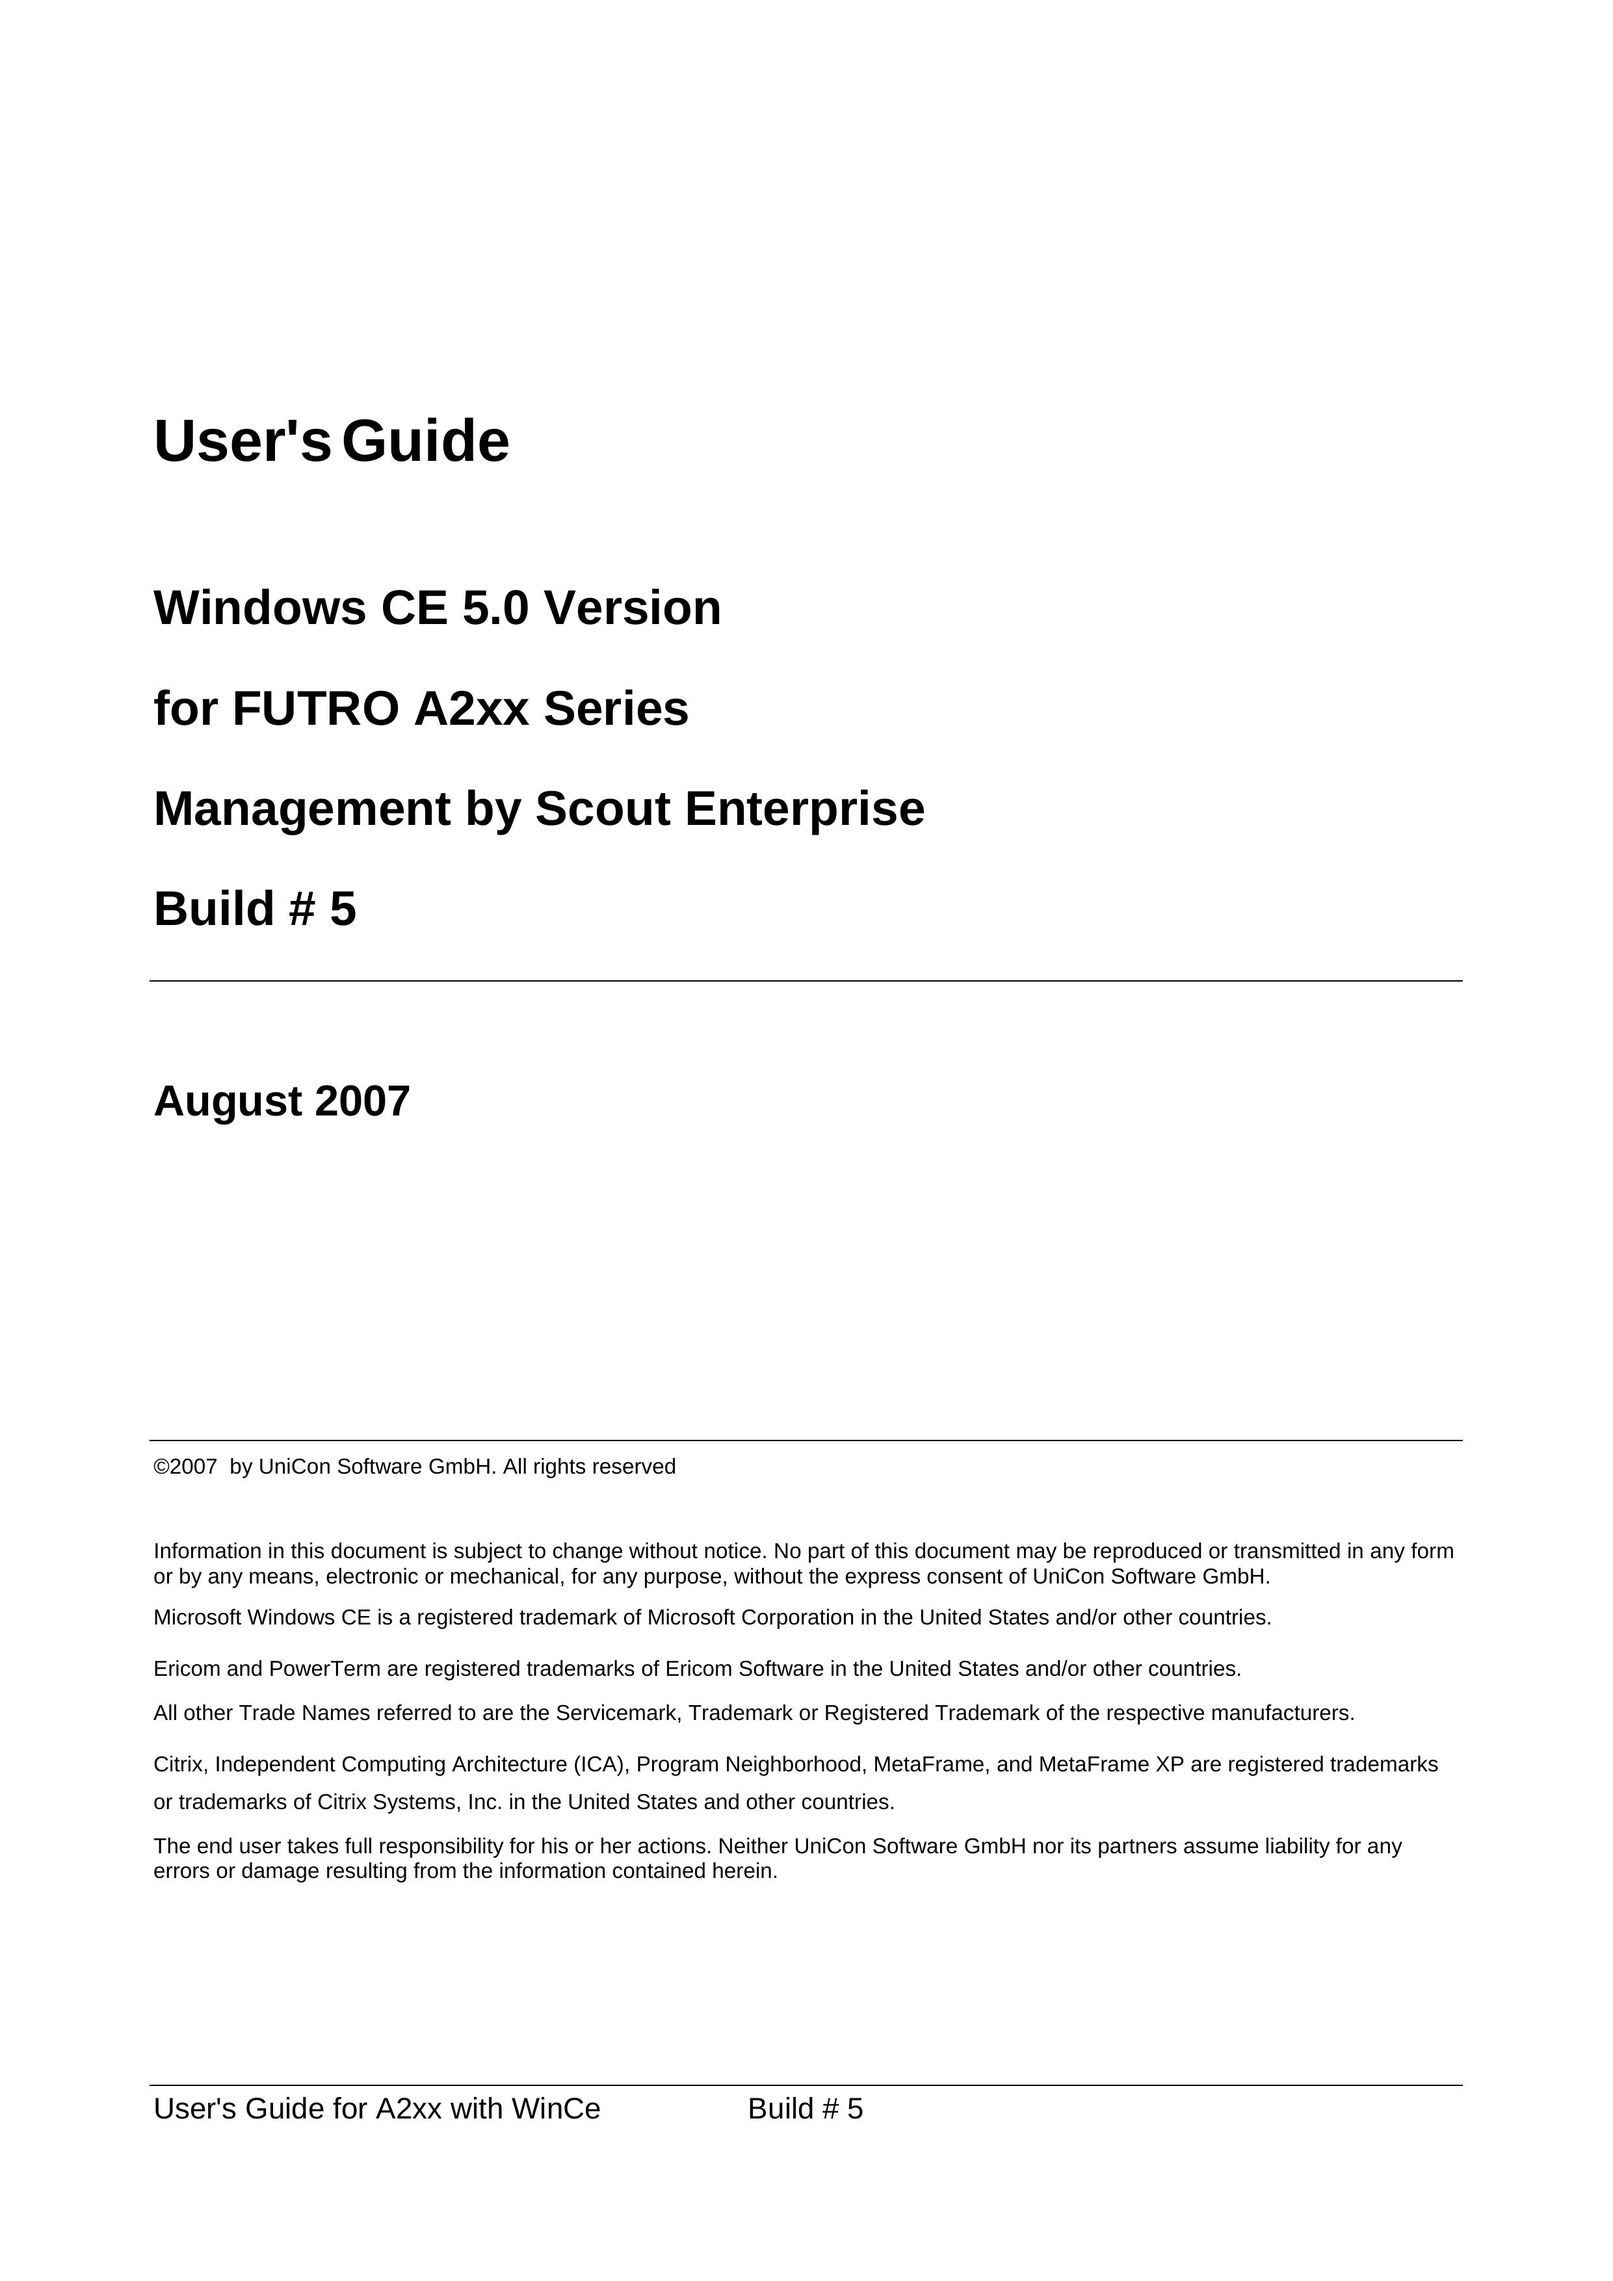 Microsoft A2xx Window User Manual